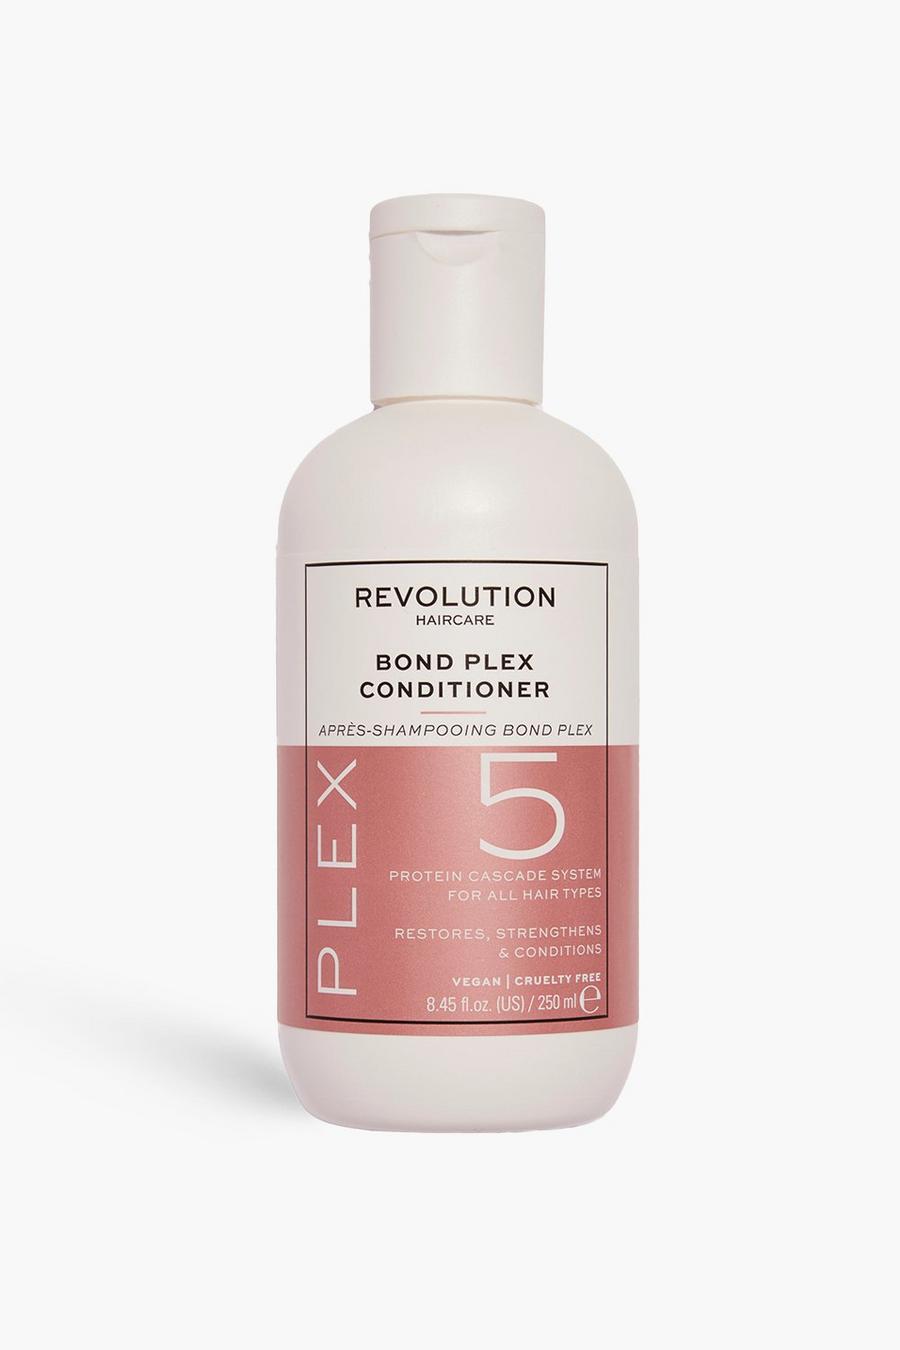 Rose gold metallic Revolution Hair Plex 5 Bond Plex Conditioner